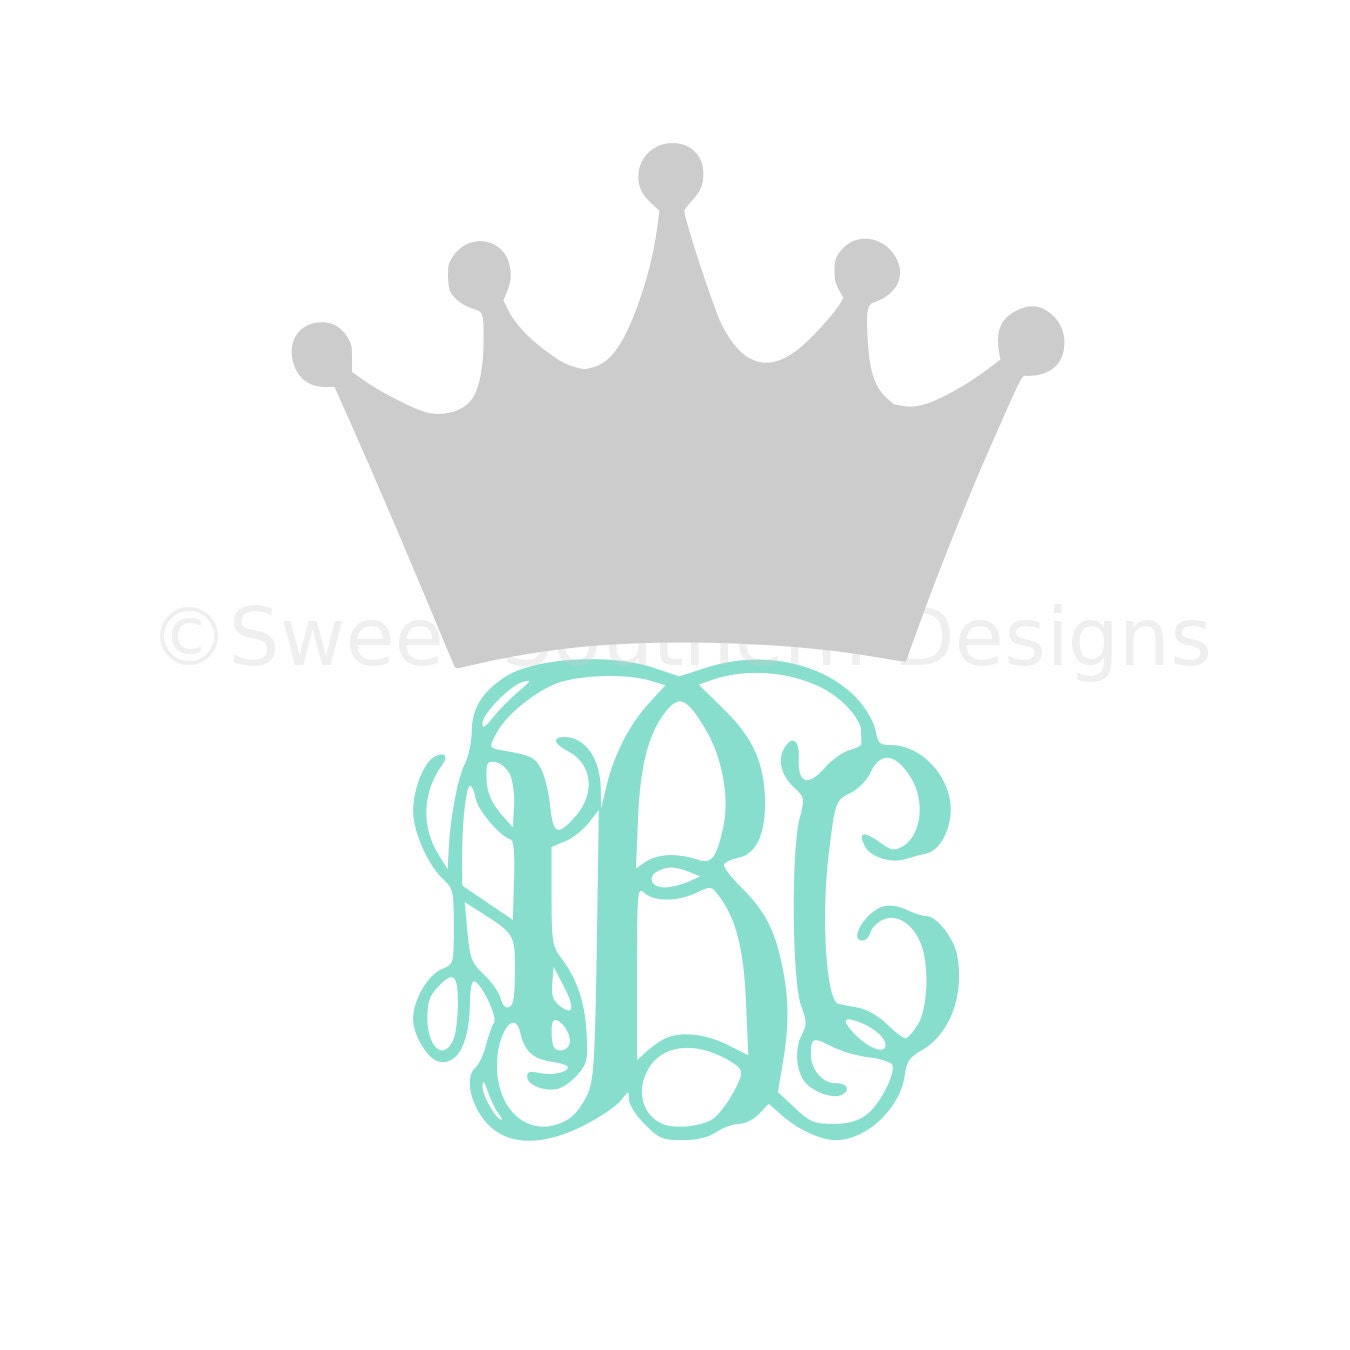 Download Monogram tiara crown SVG instant download design for cricut or